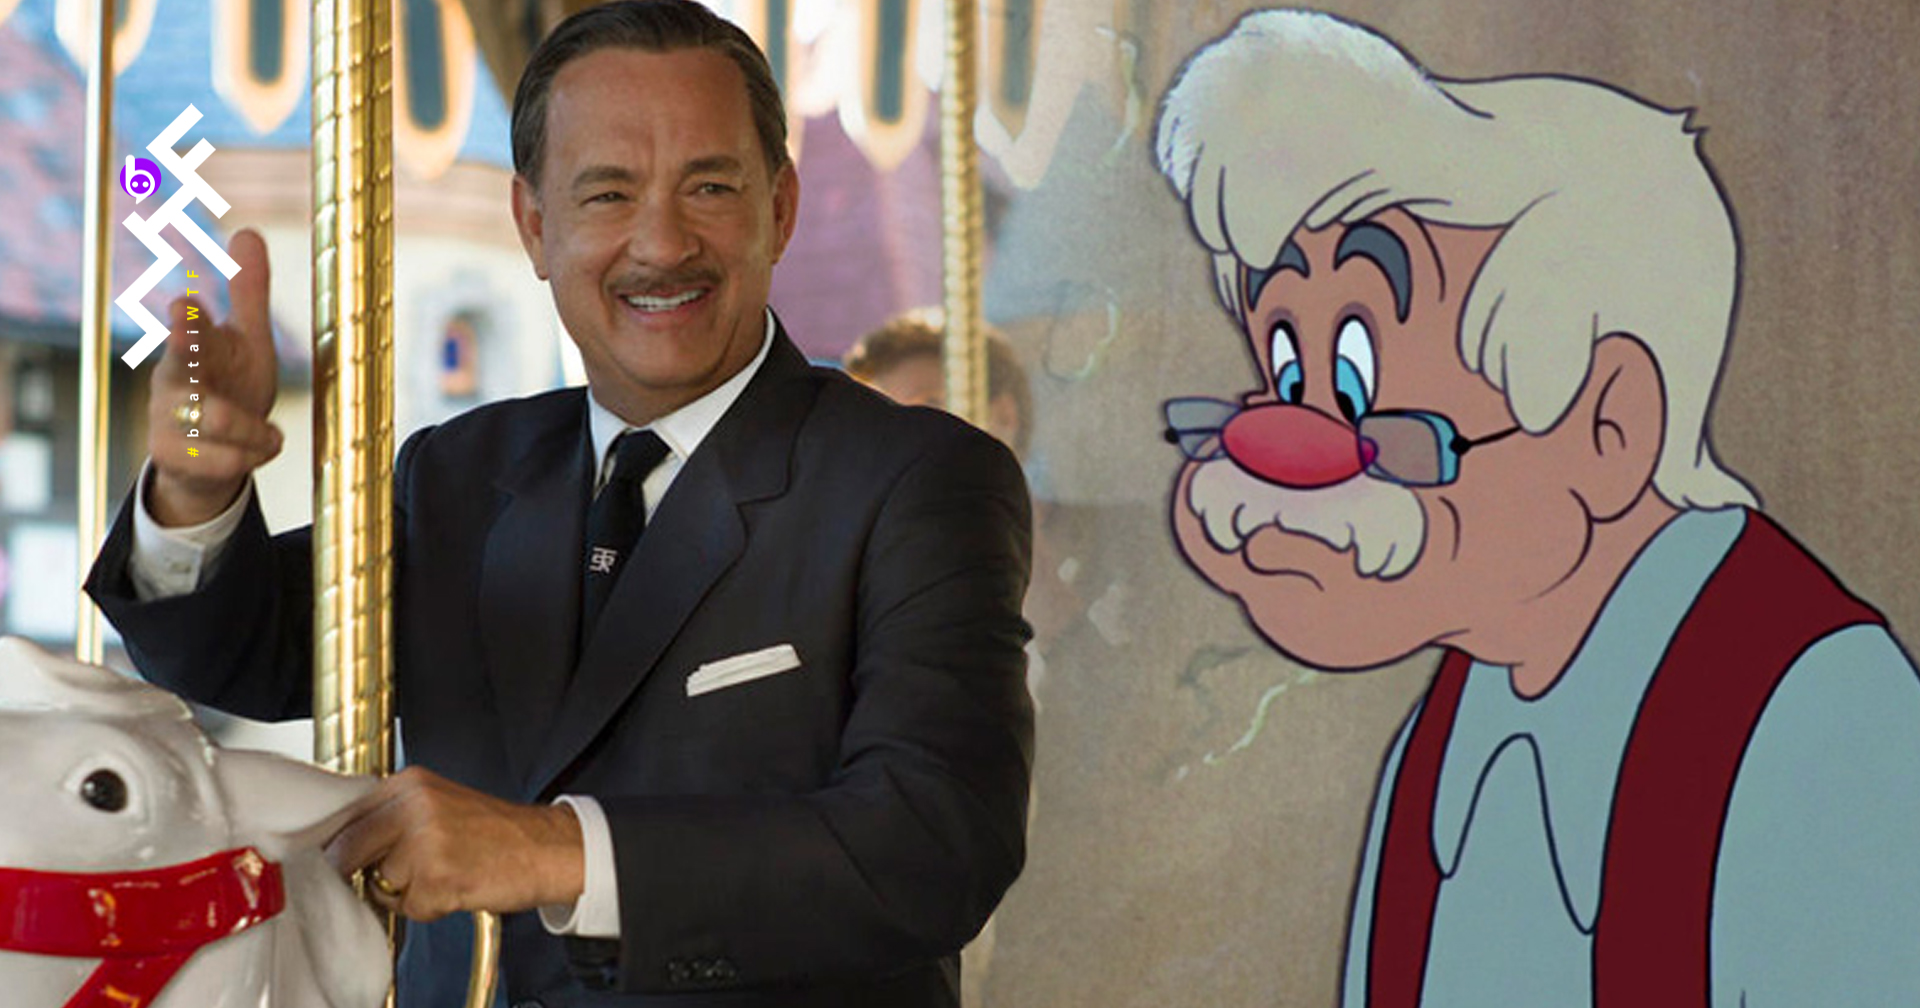 Tom Hanks เจรจารับบท “ลุงช่างไม้” เจ้าของ Pinocchio ในหนังของผู้กำกับ Forrest Gump